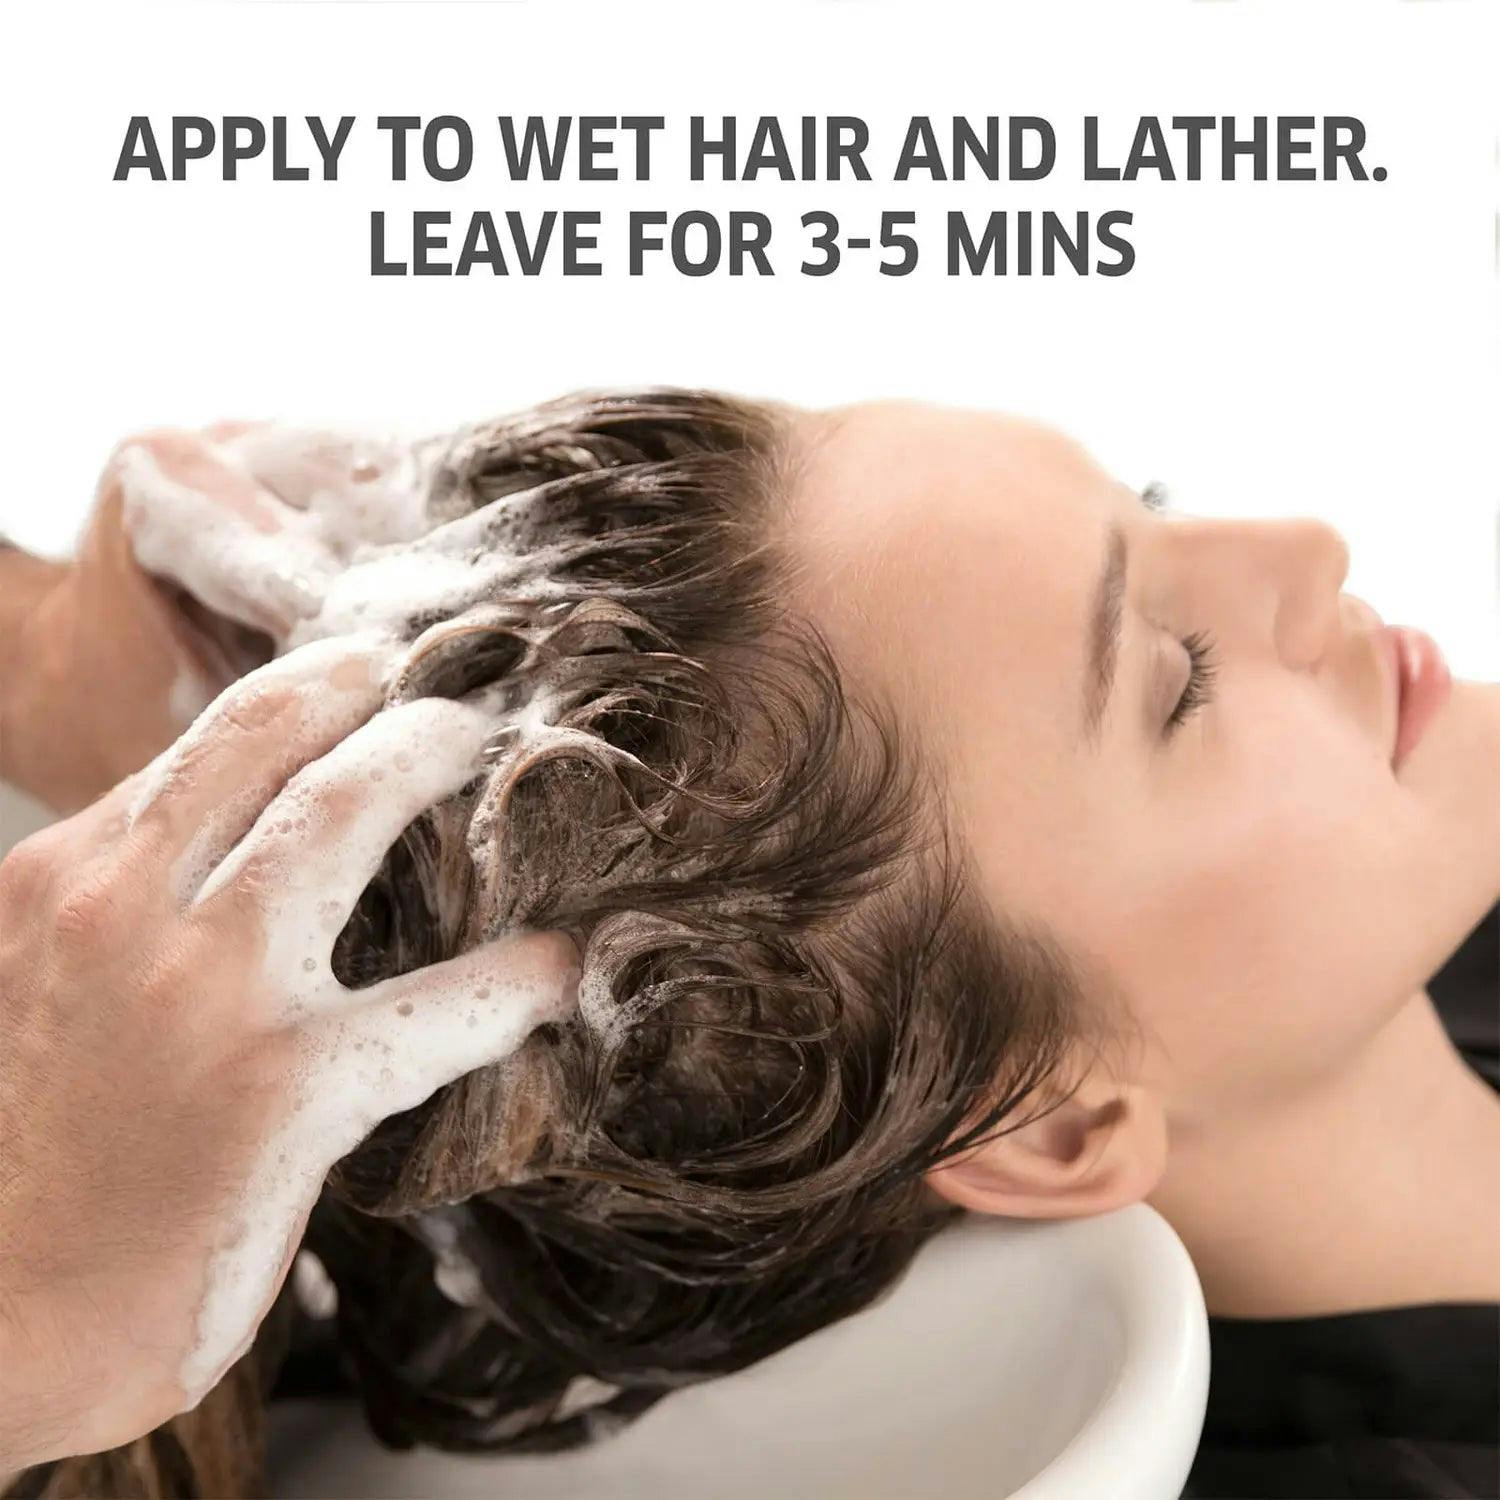 Wella Professionals Invigo Blonde Recharge Color Refreshing Shampoo 1000ml